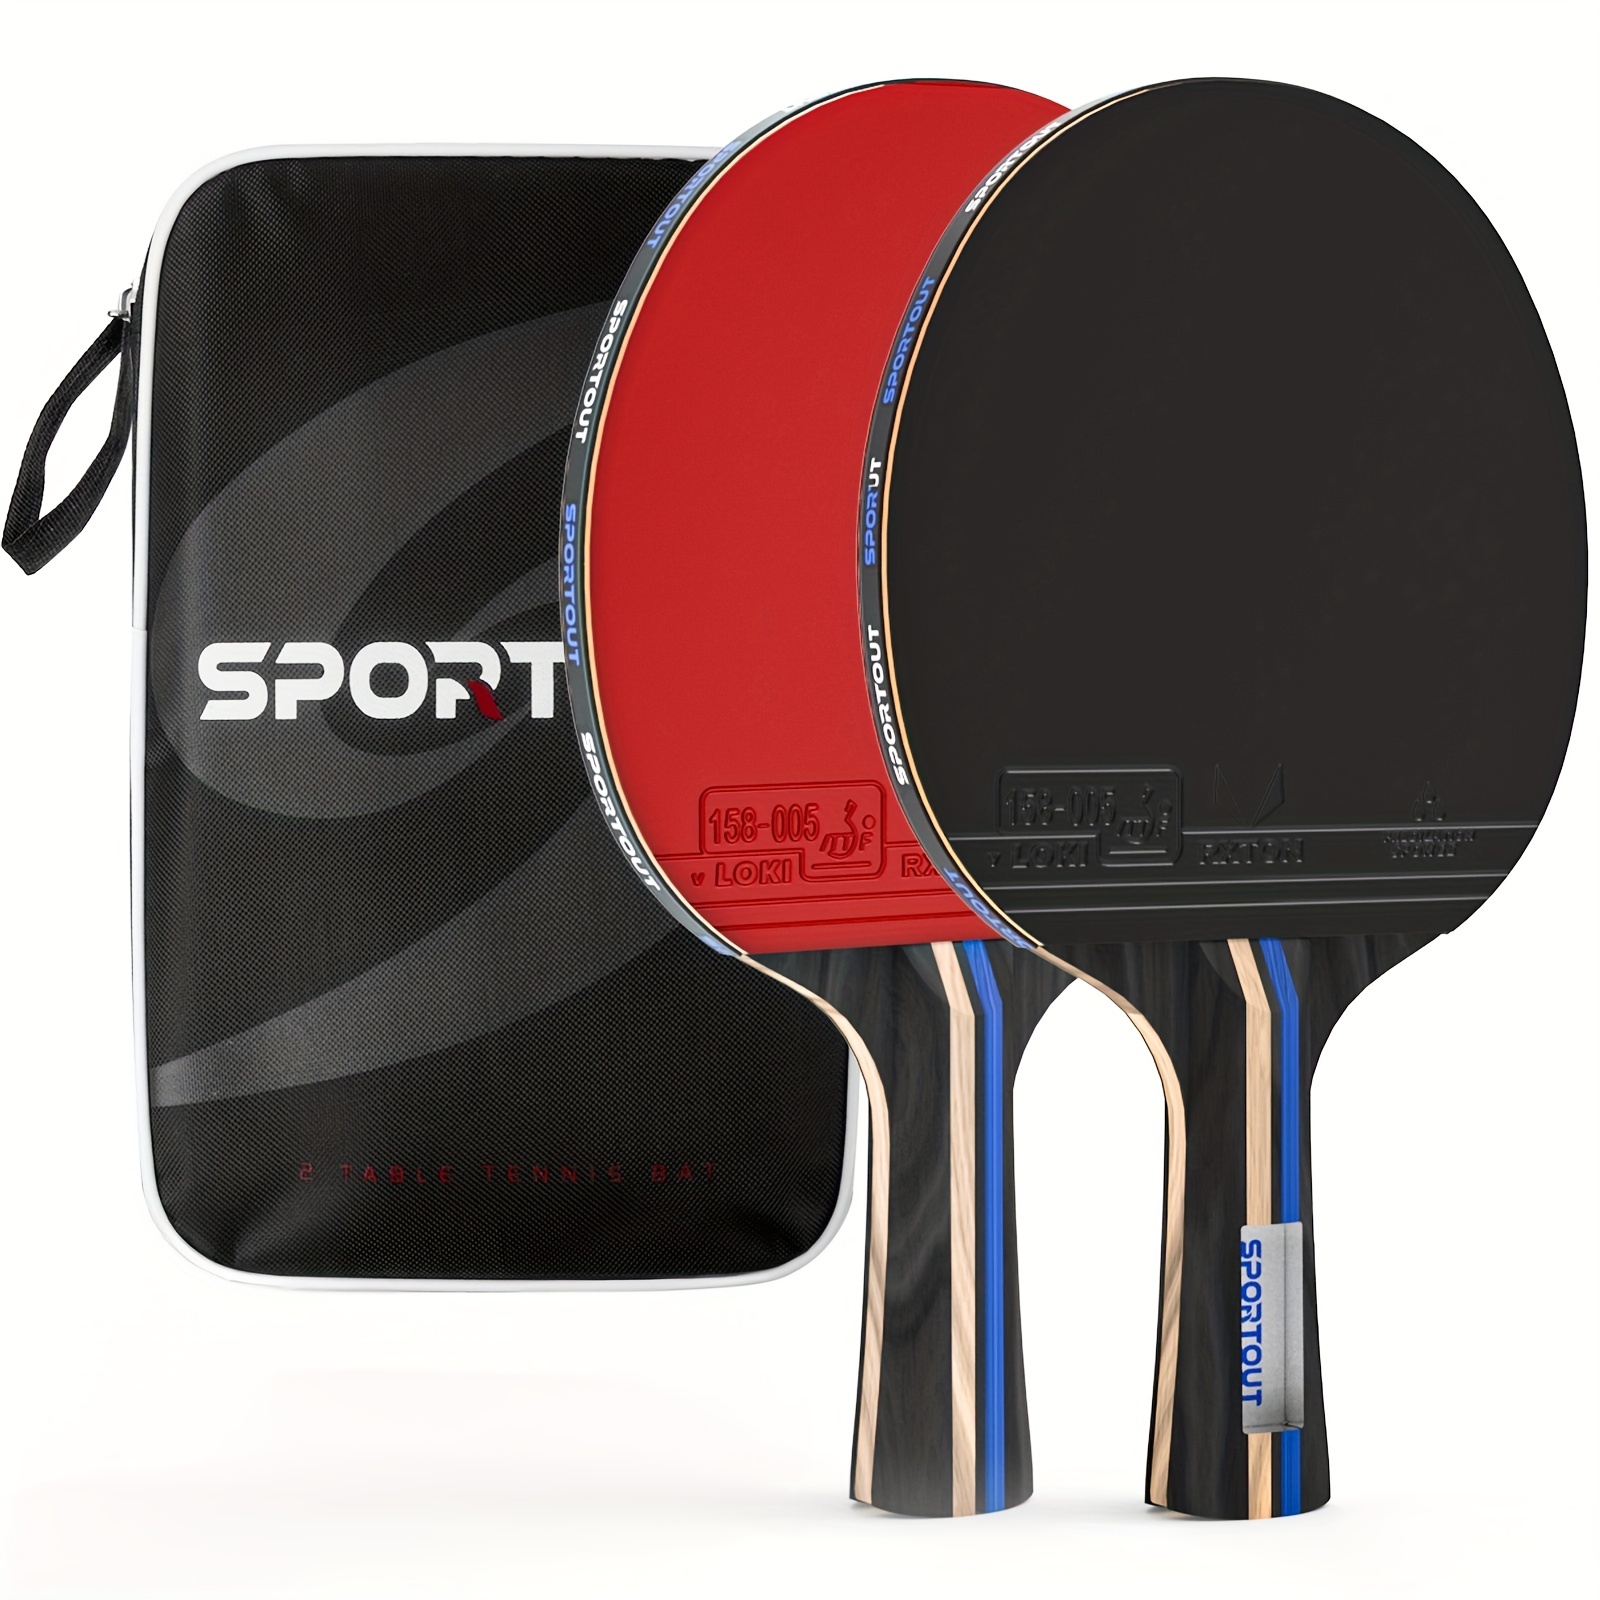 5PCS Ping Pong Portable Set Table Tennis Net Training Professional